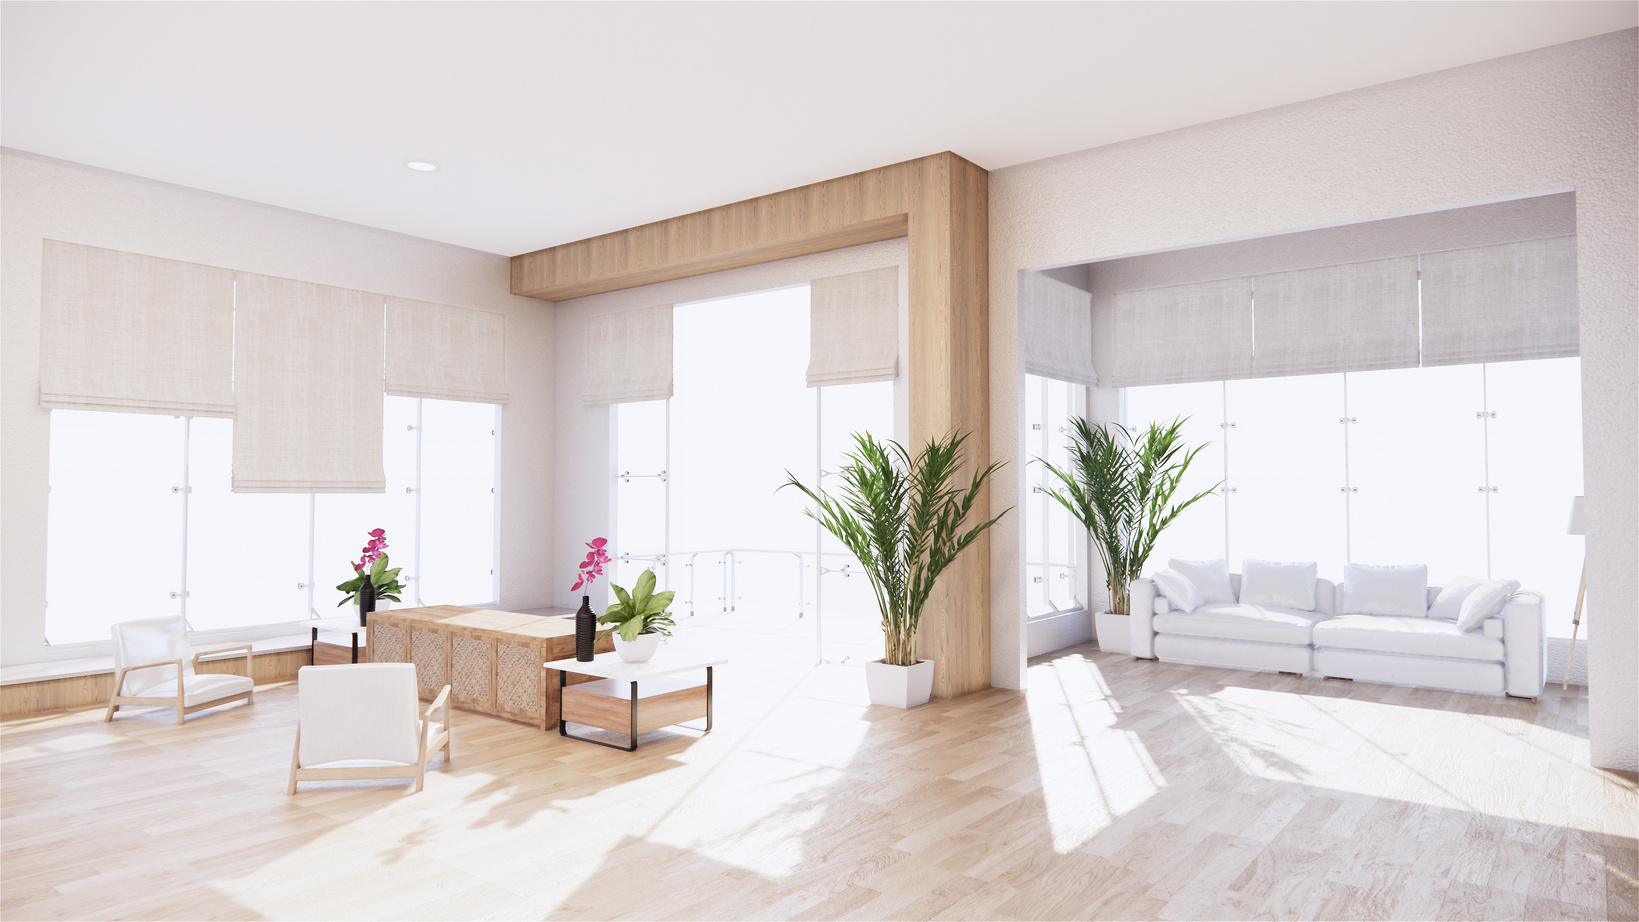 Living Room Interior with Wooden Floor 